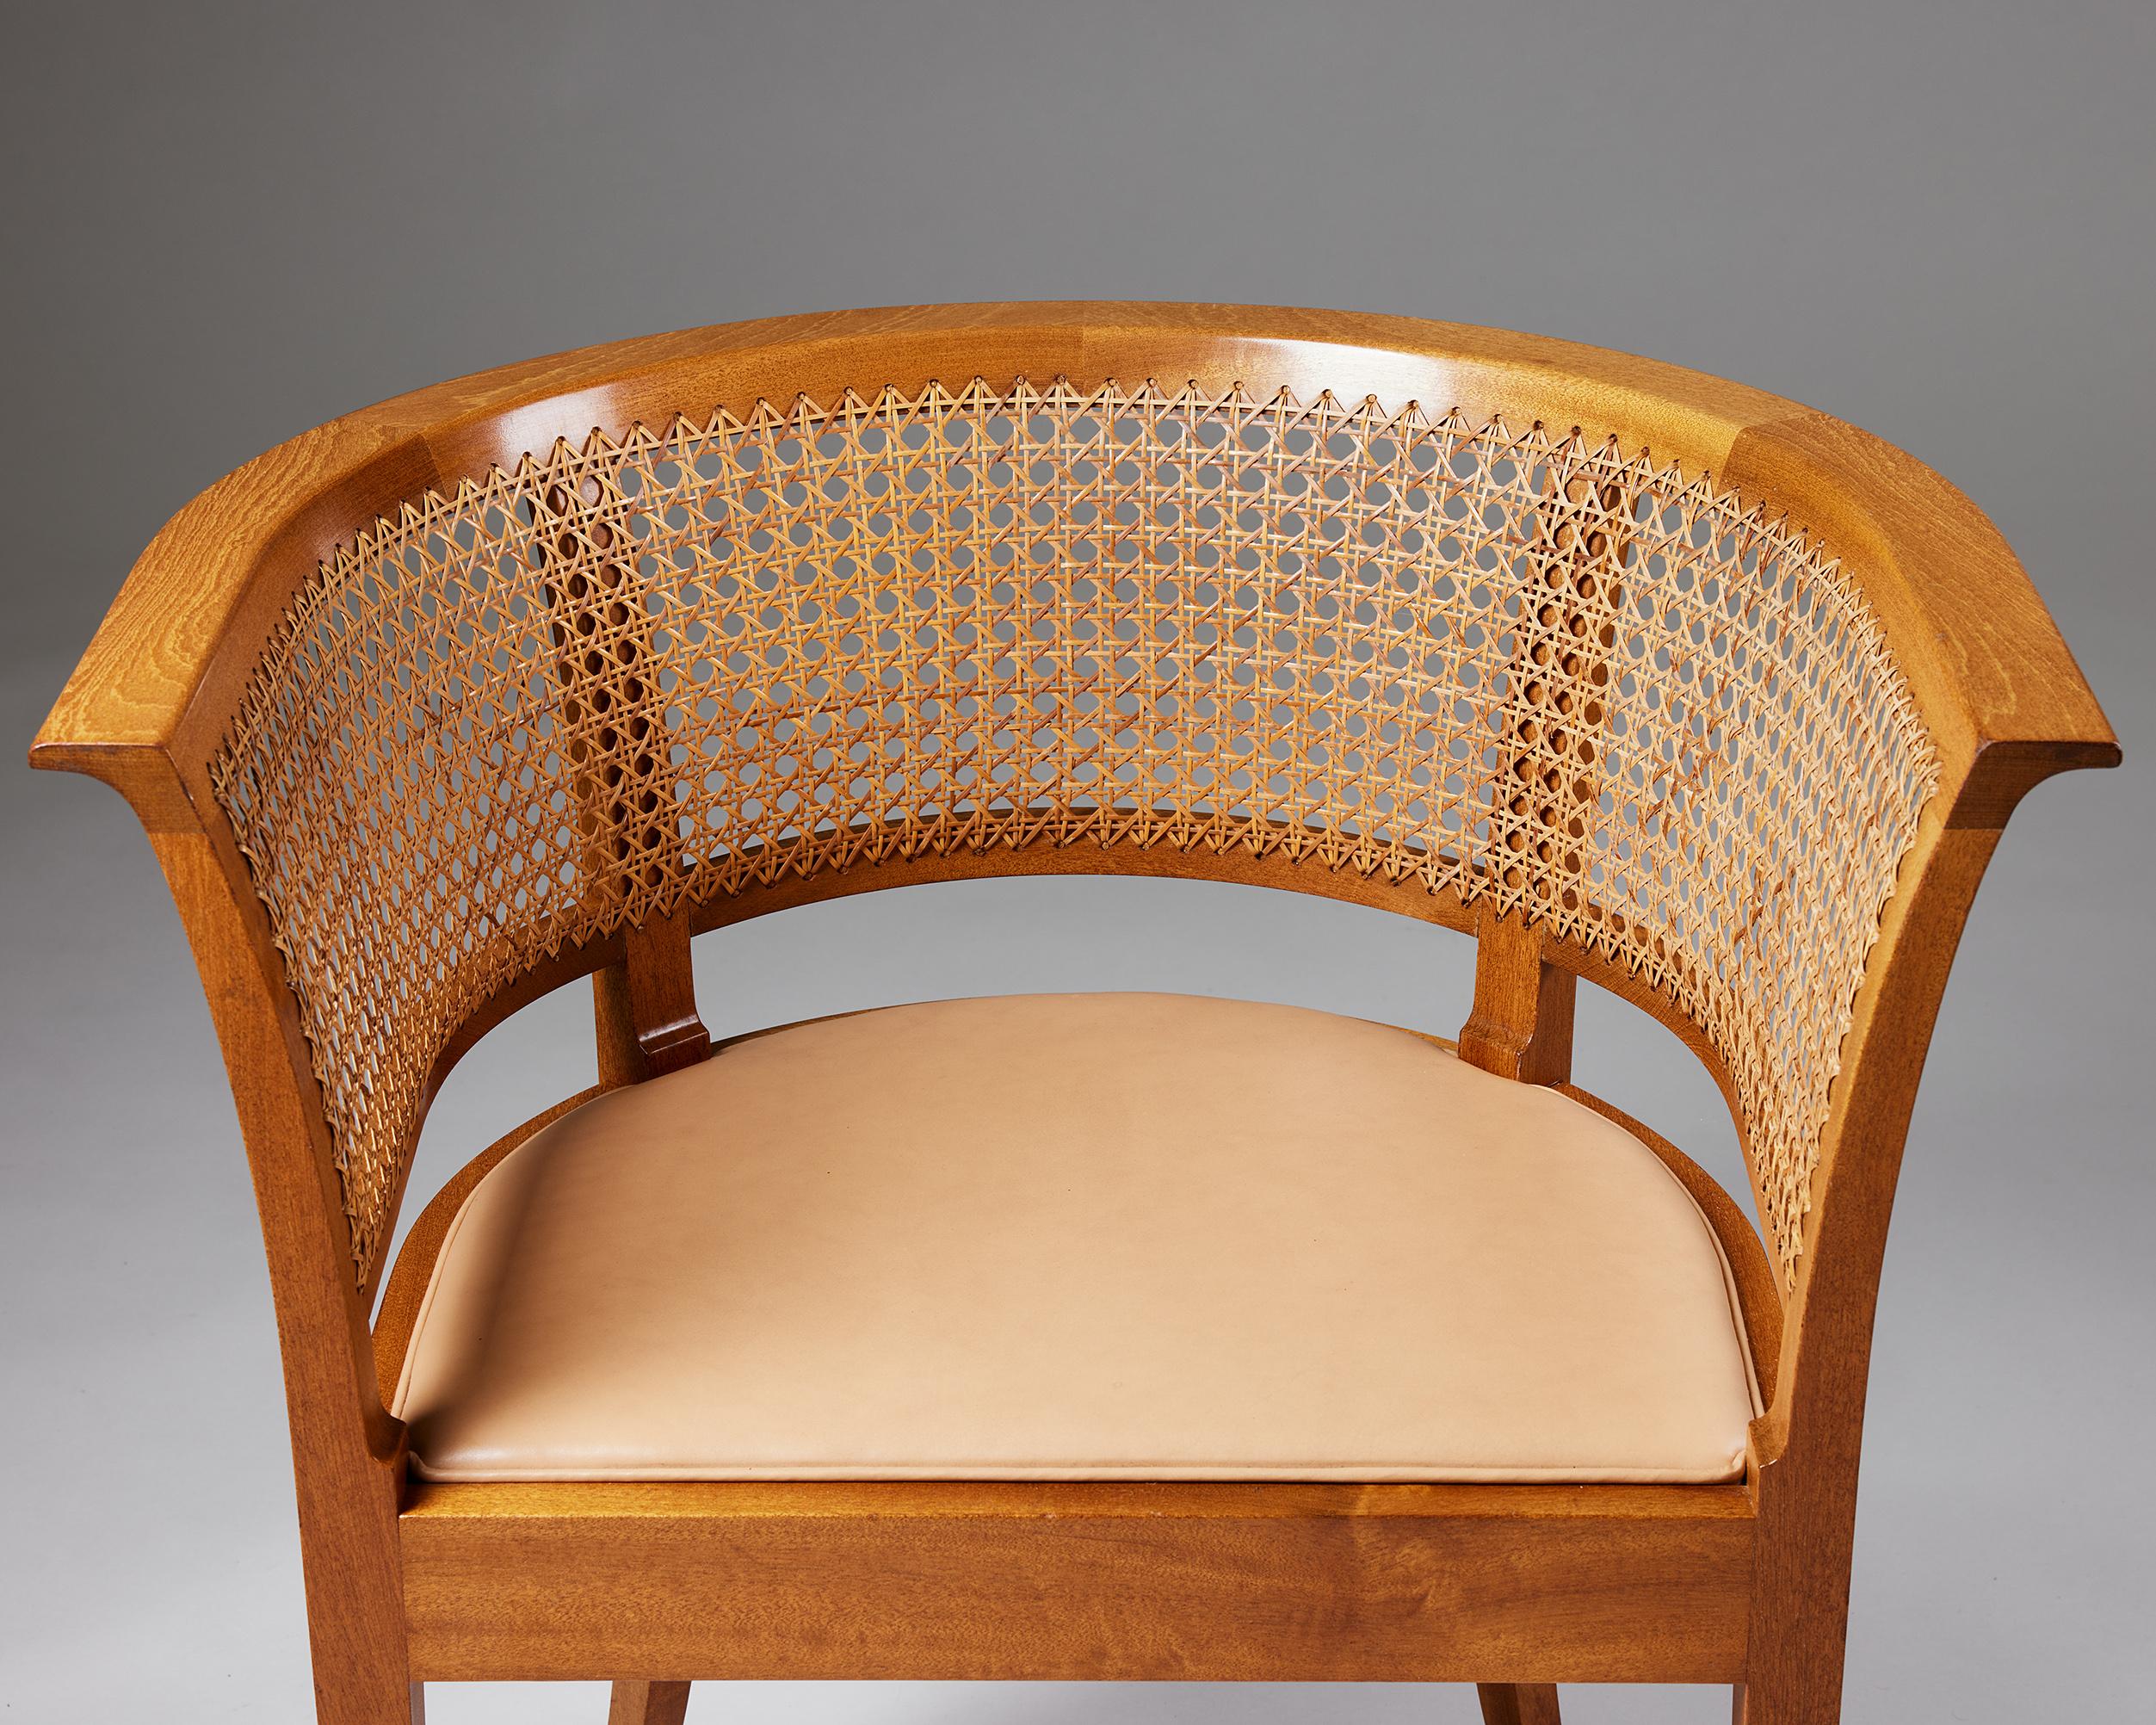 20th Century ‘The Faaborg Chair’ Designed by Kaare Klint, Denmark, 1914